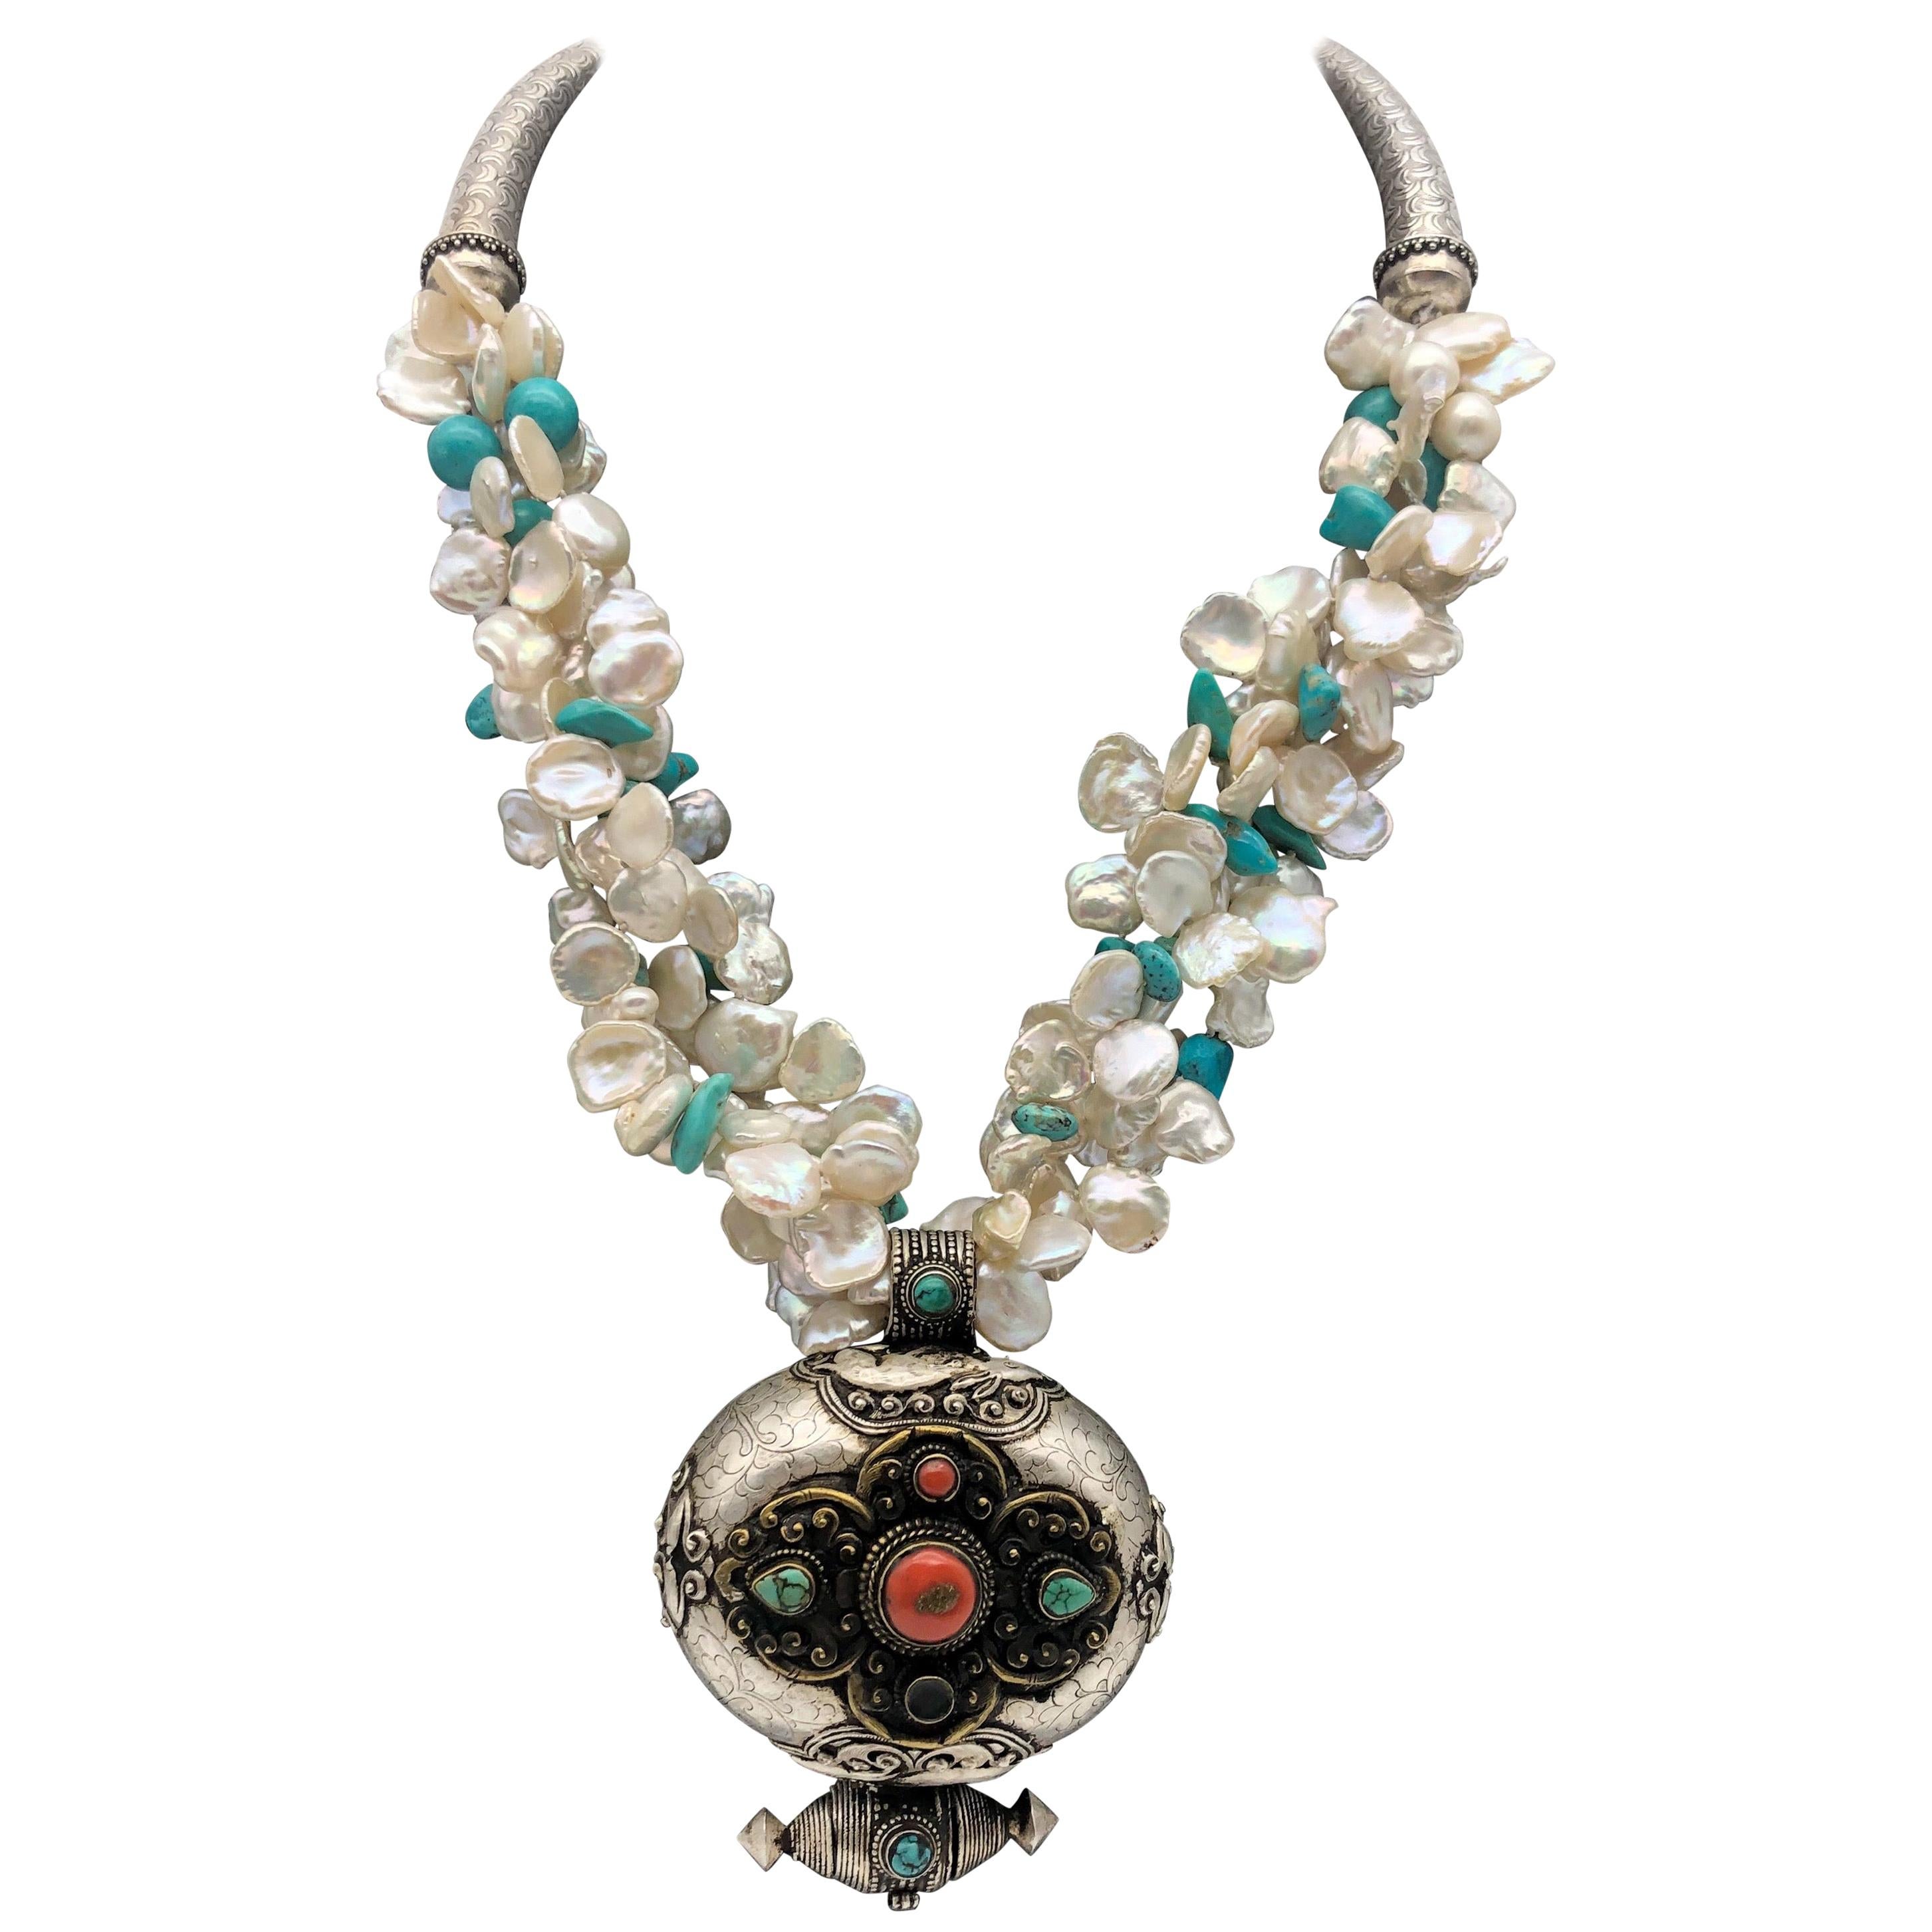 A.Jeschel Traditional Tibetan Ghau Box pendant with Turquoise and Keshi Pearls